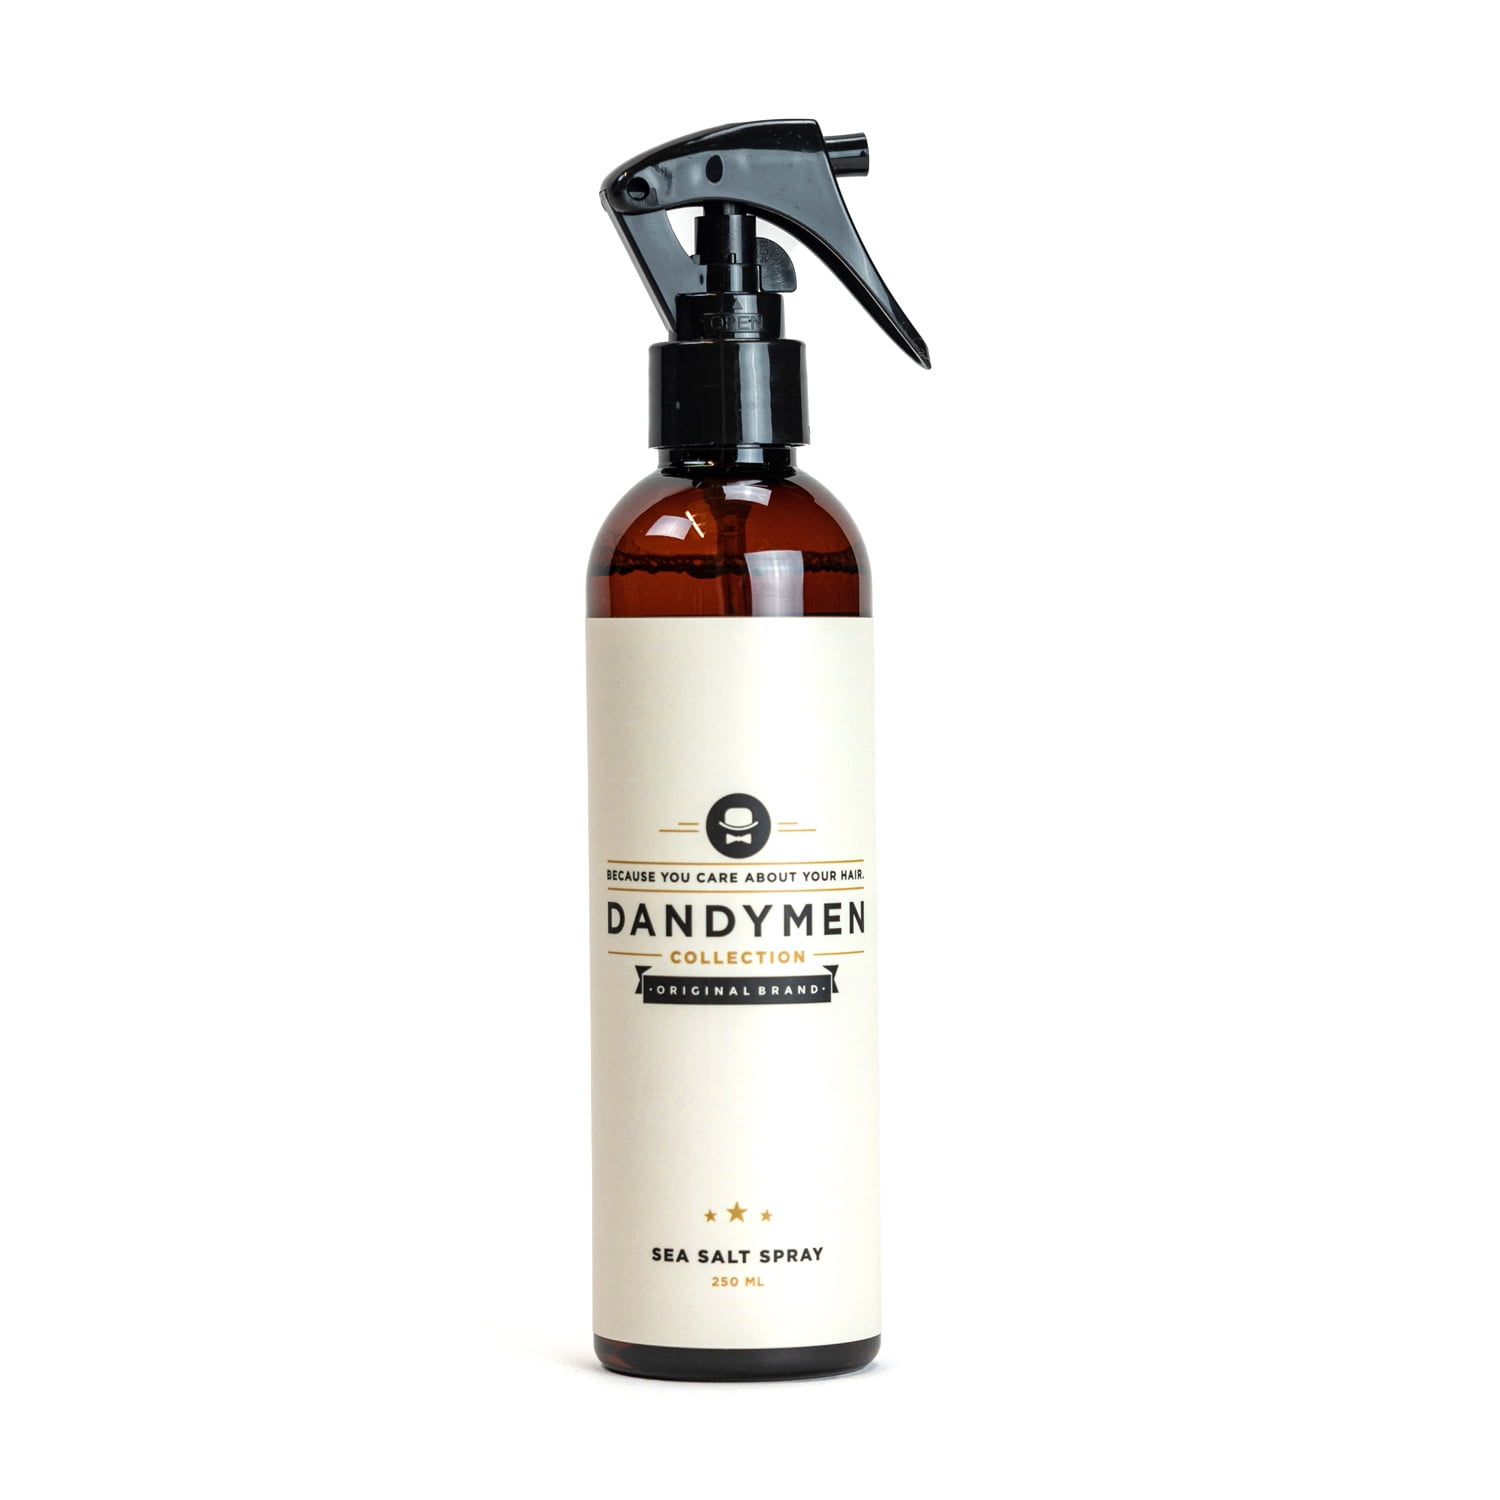 Dandymen Collection Men’s Premium Texturizing Sea Salt Hair Spray, 8.45 oz